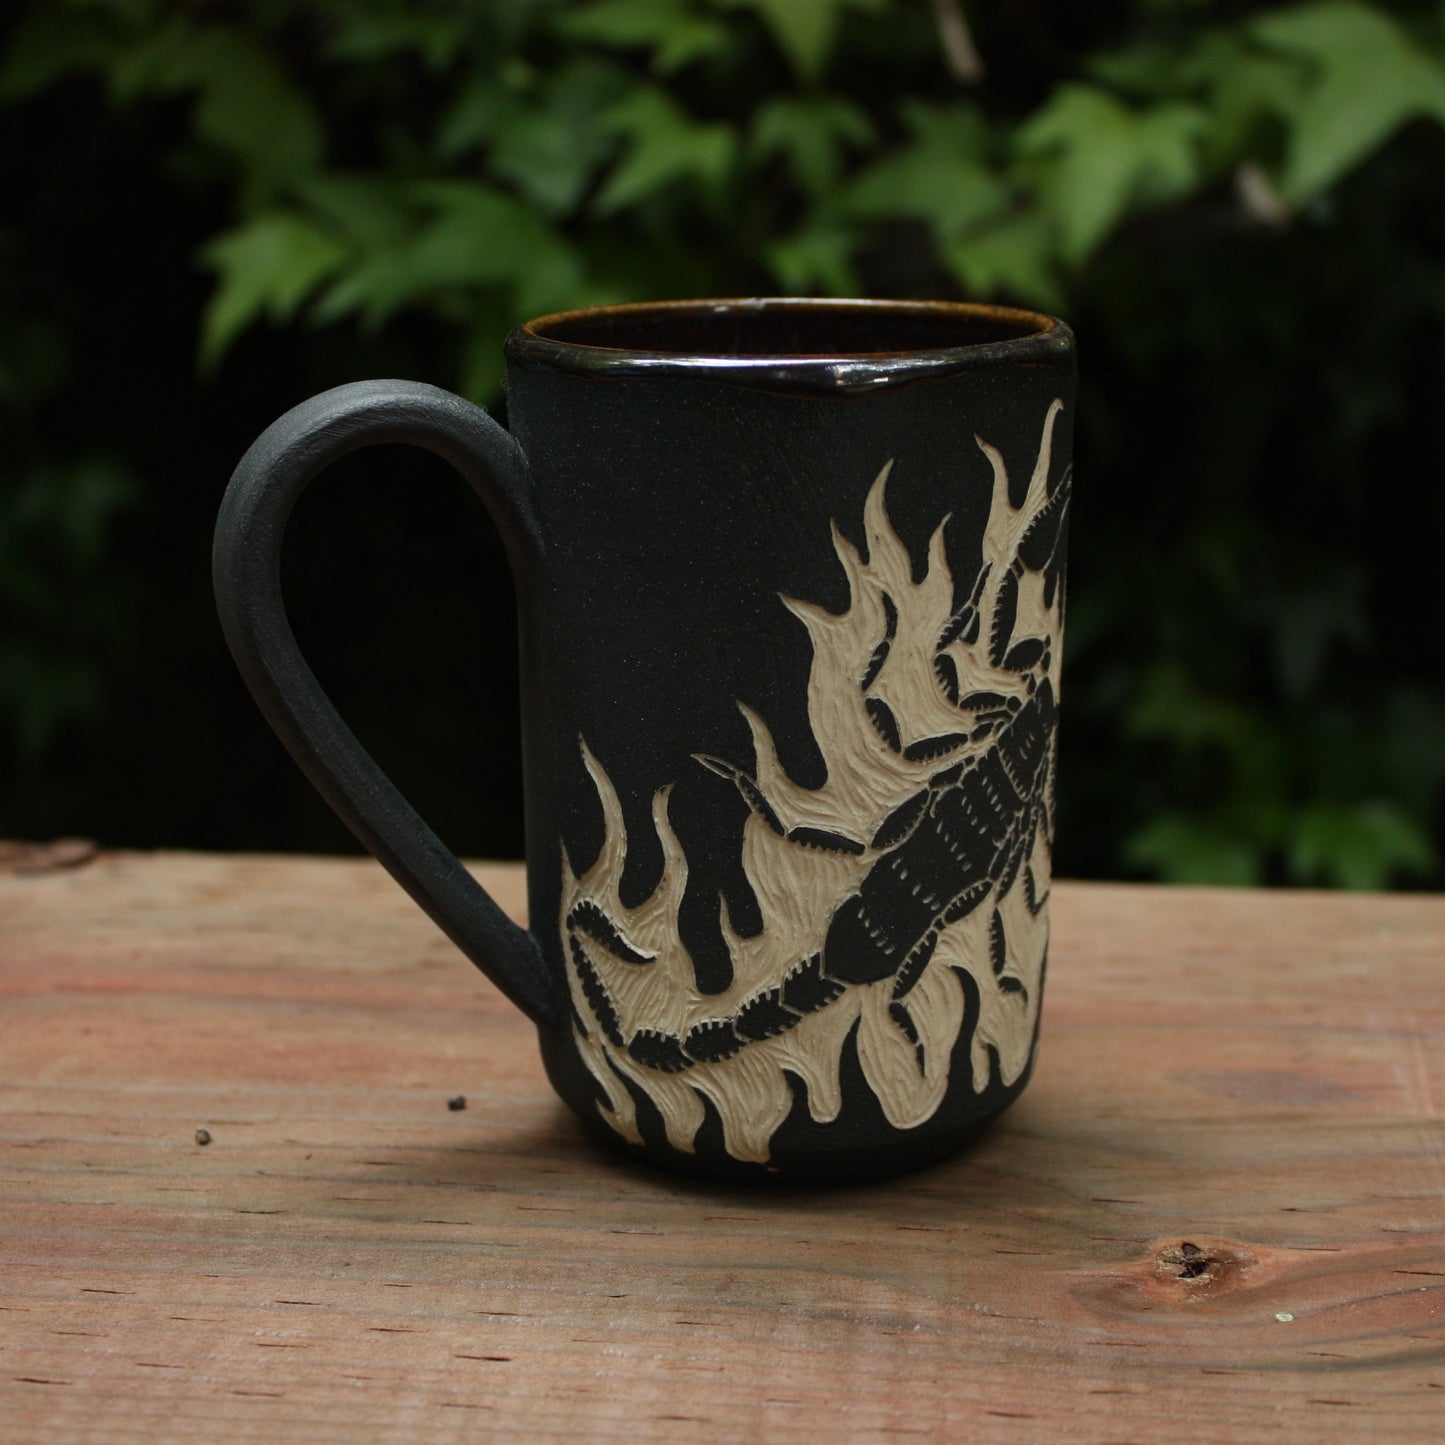 Discount Fire Scorpion mug